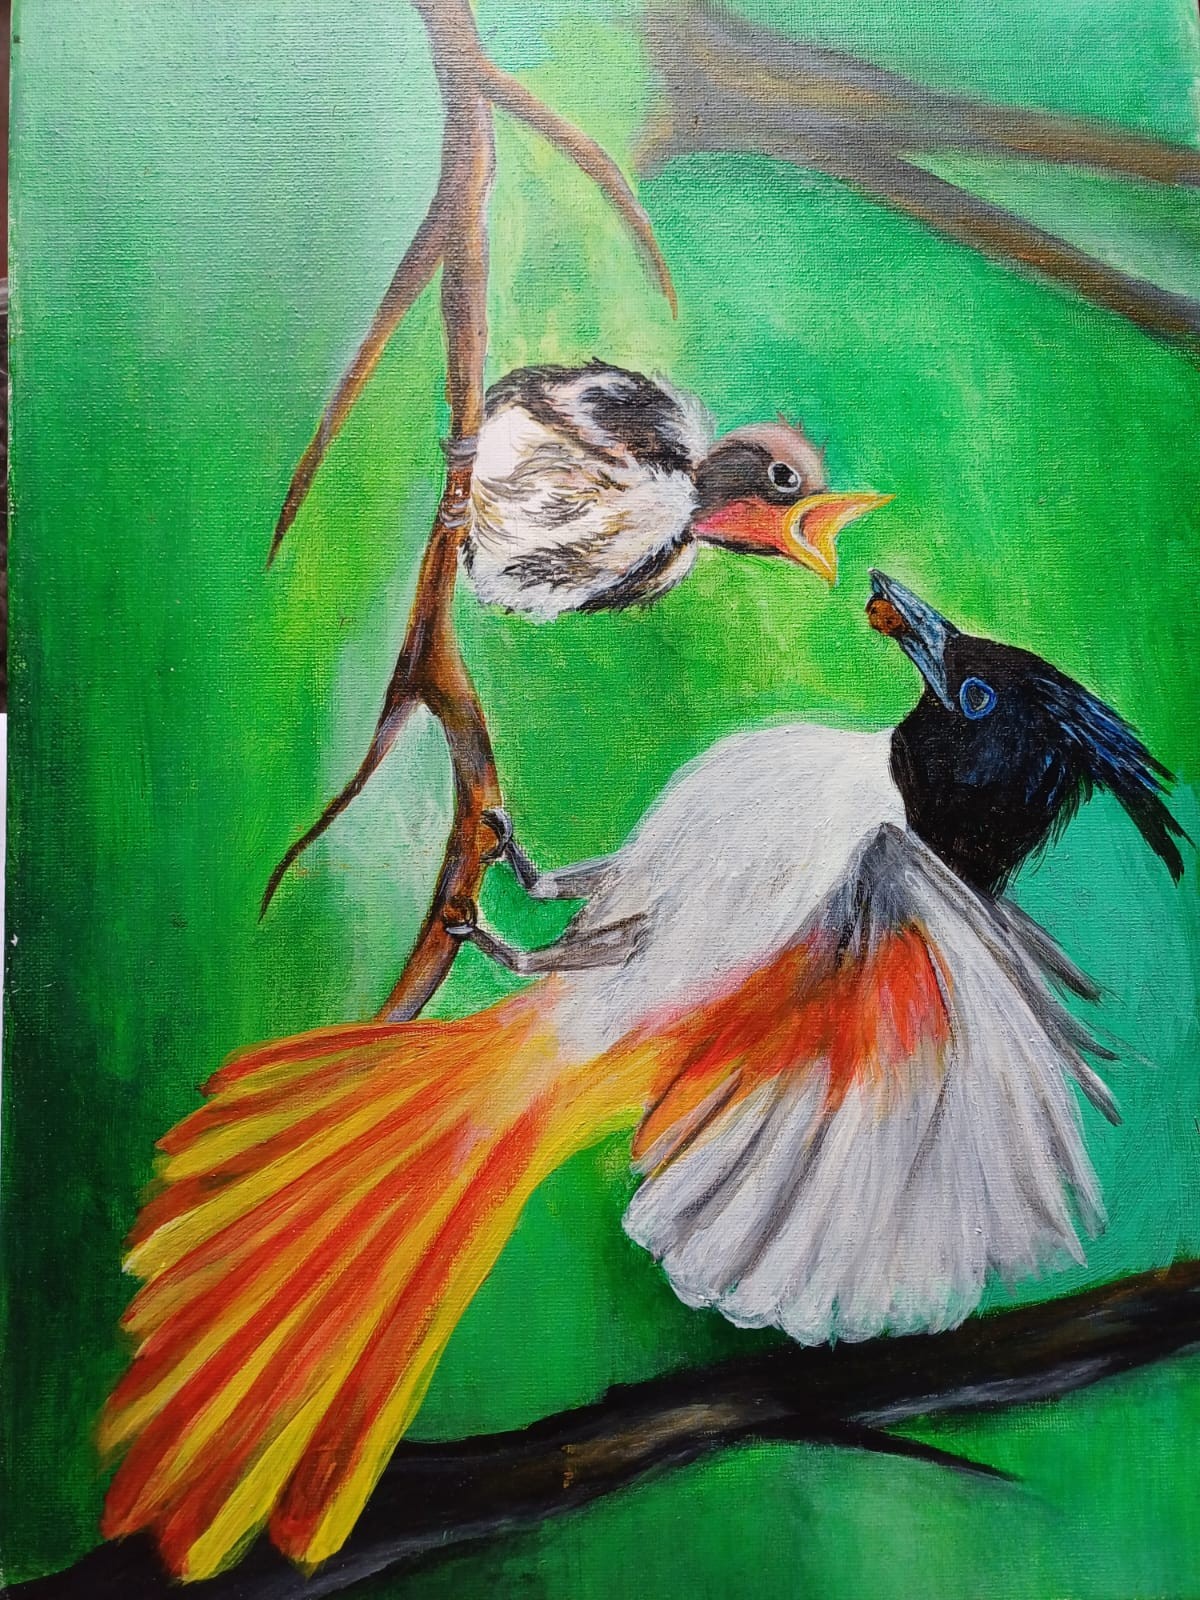 Feeding bird by Sahana Thiyagaraja